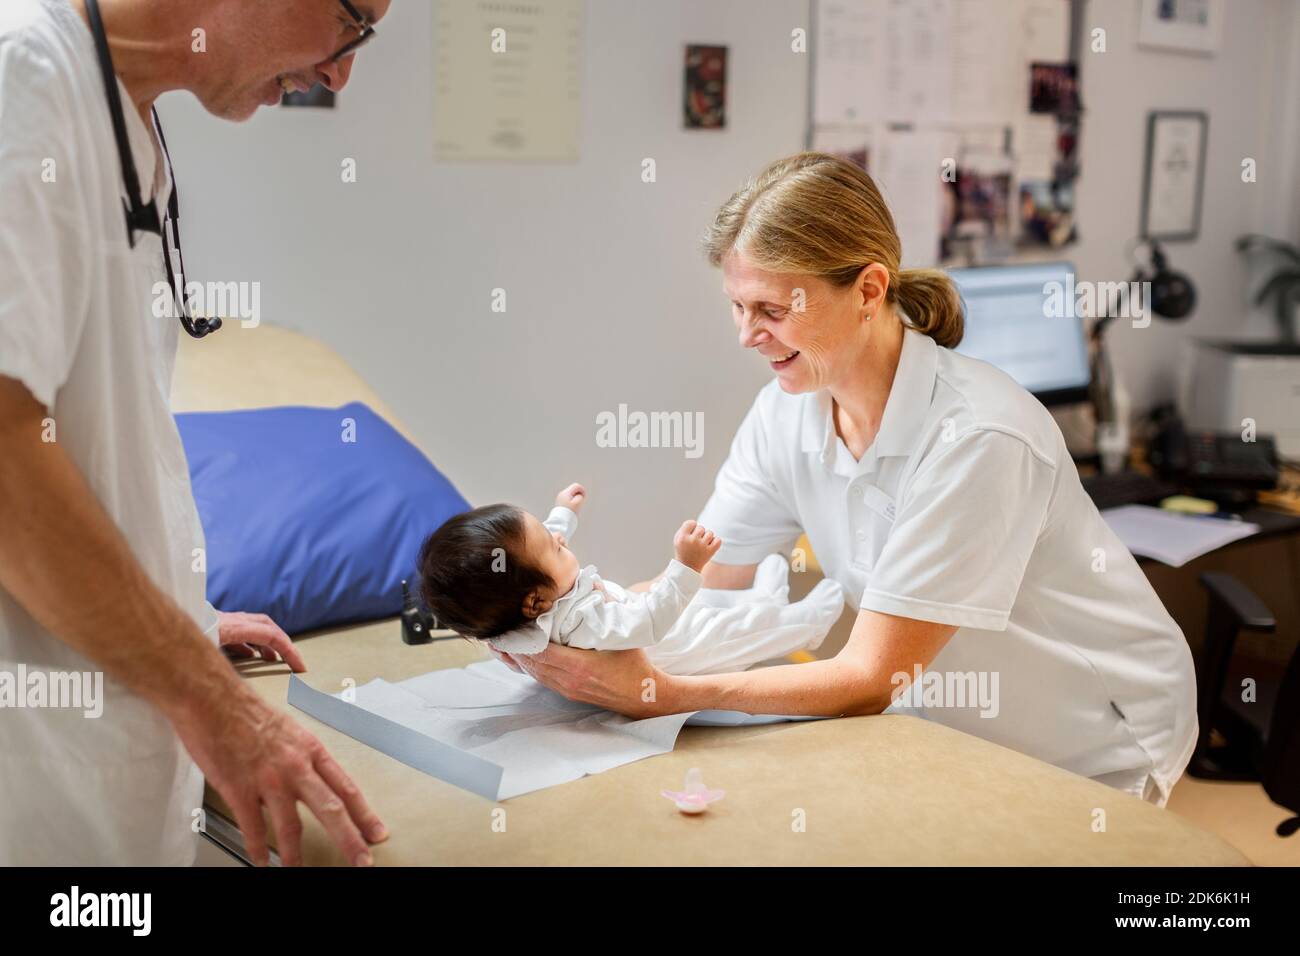 Female doctor examining baby Stock Photo